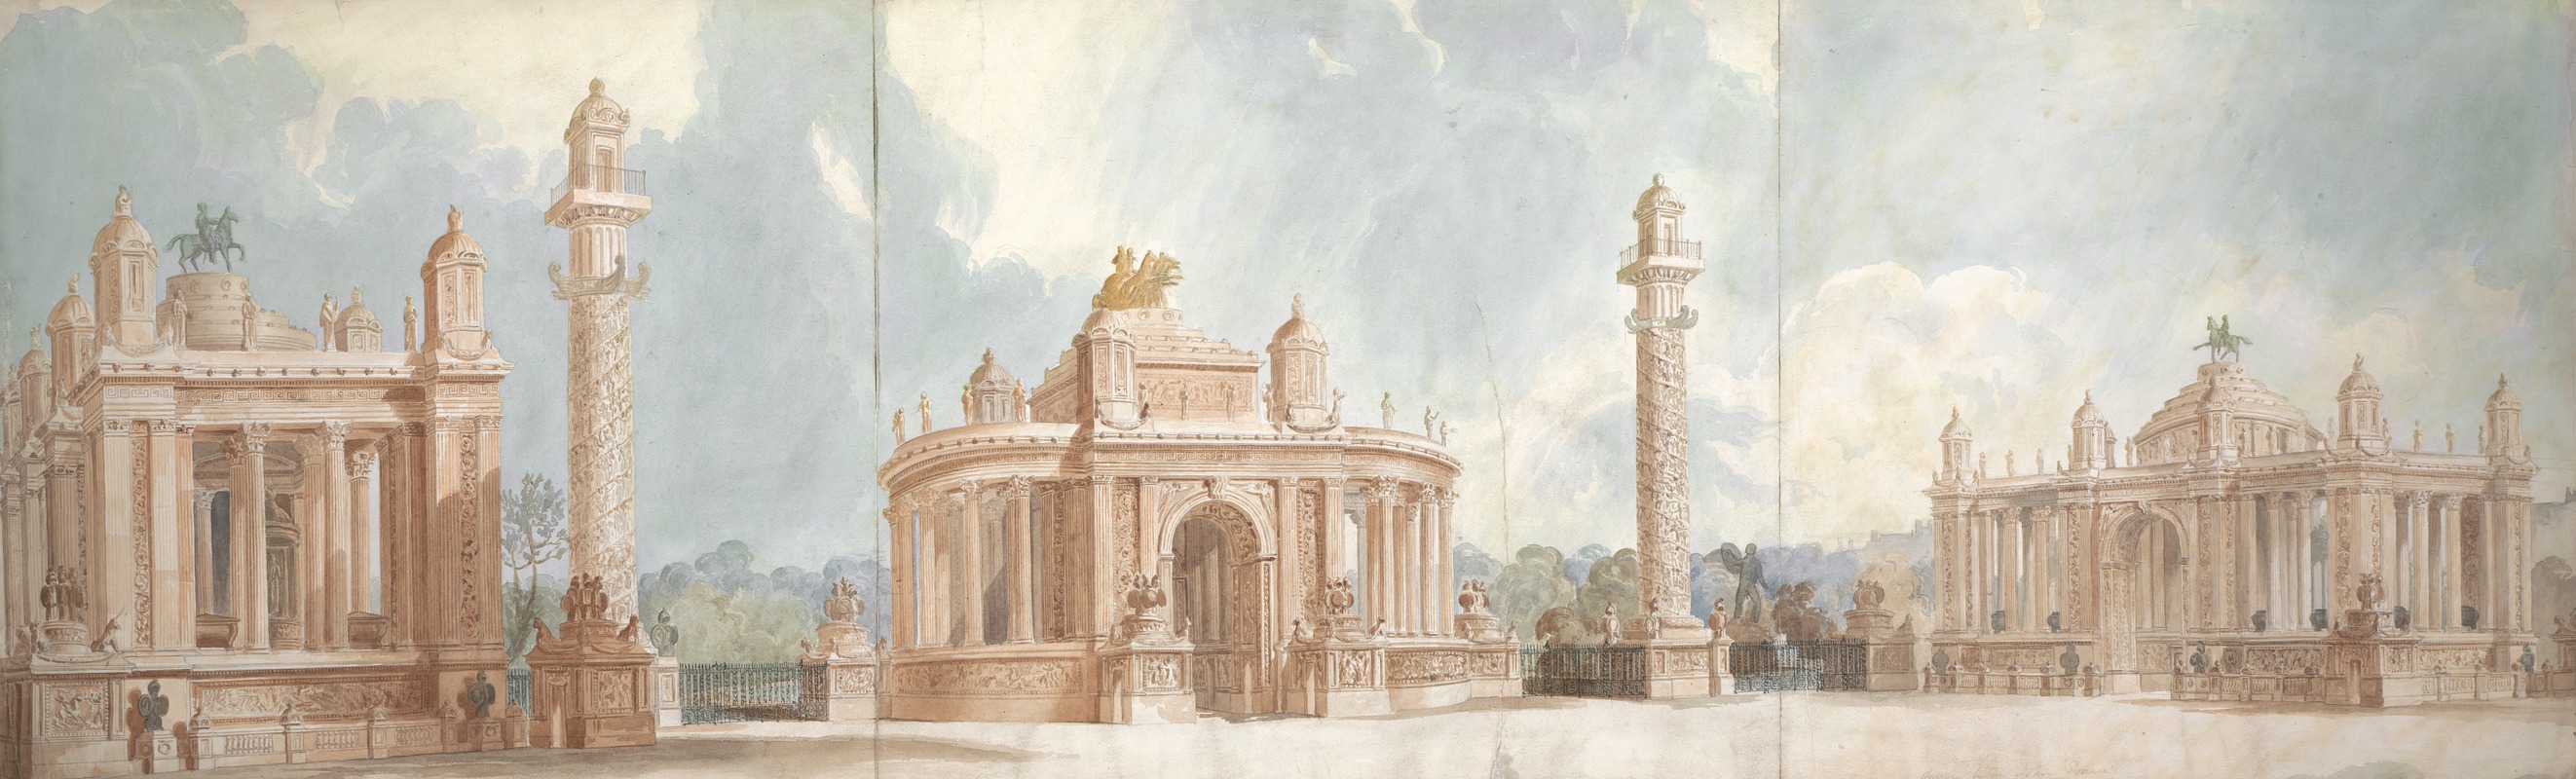 Sir John Soane - Design for Hyde Park and St. James’ Park Entrance